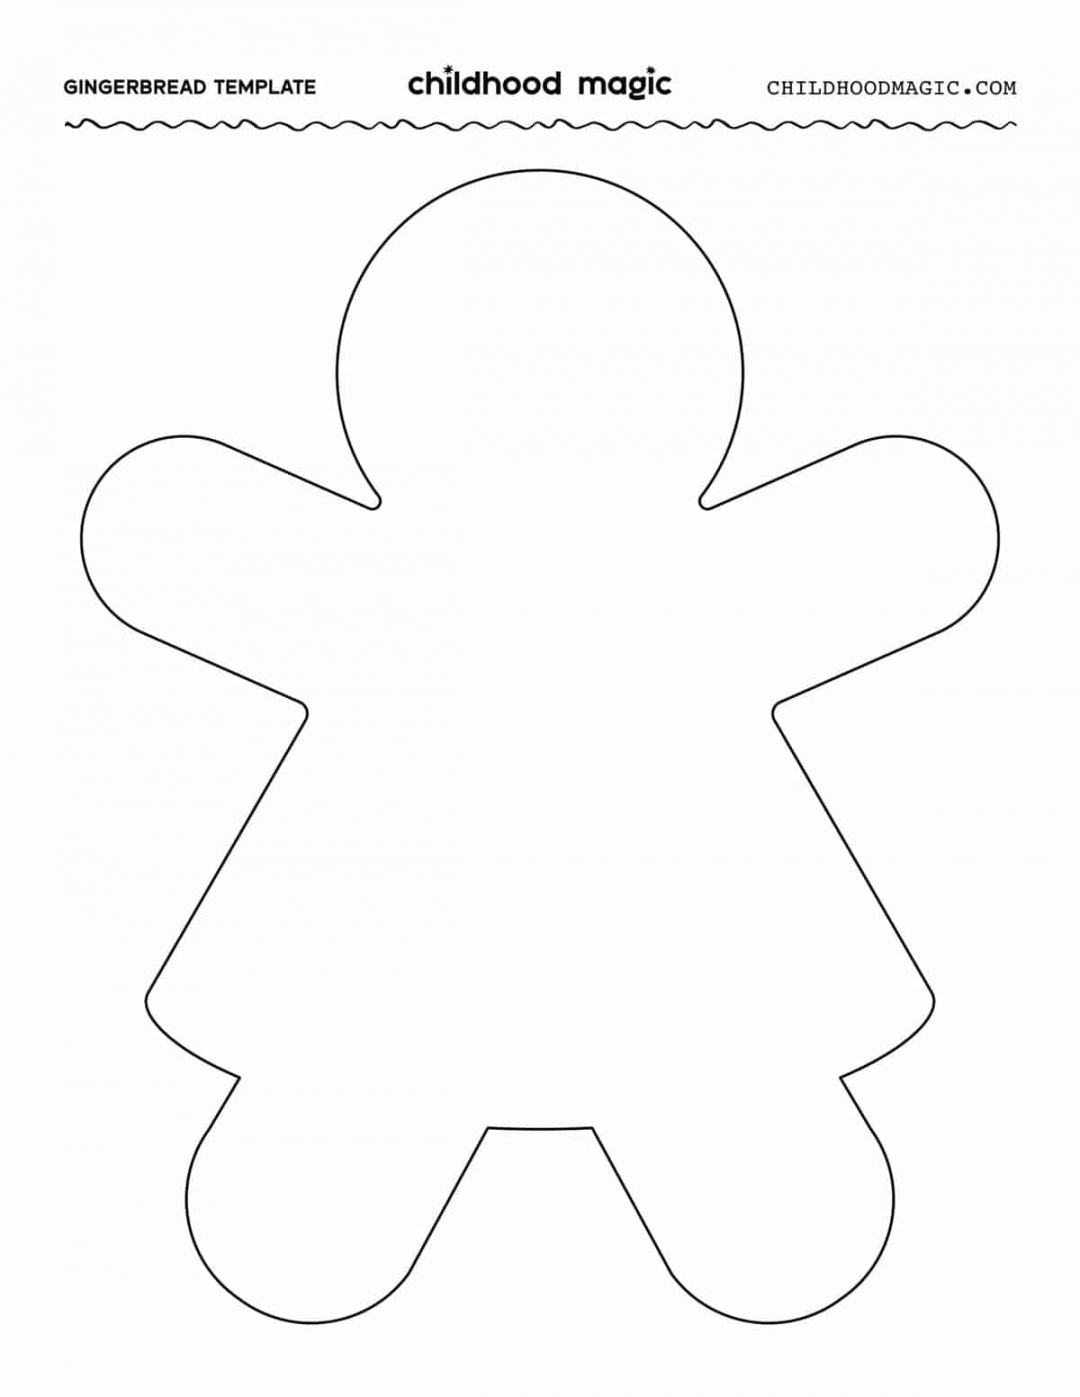 Gingerbread Man Template - Free Printable - Childhood Magic - FREE Printables - Gingerbread Man Template Pdf